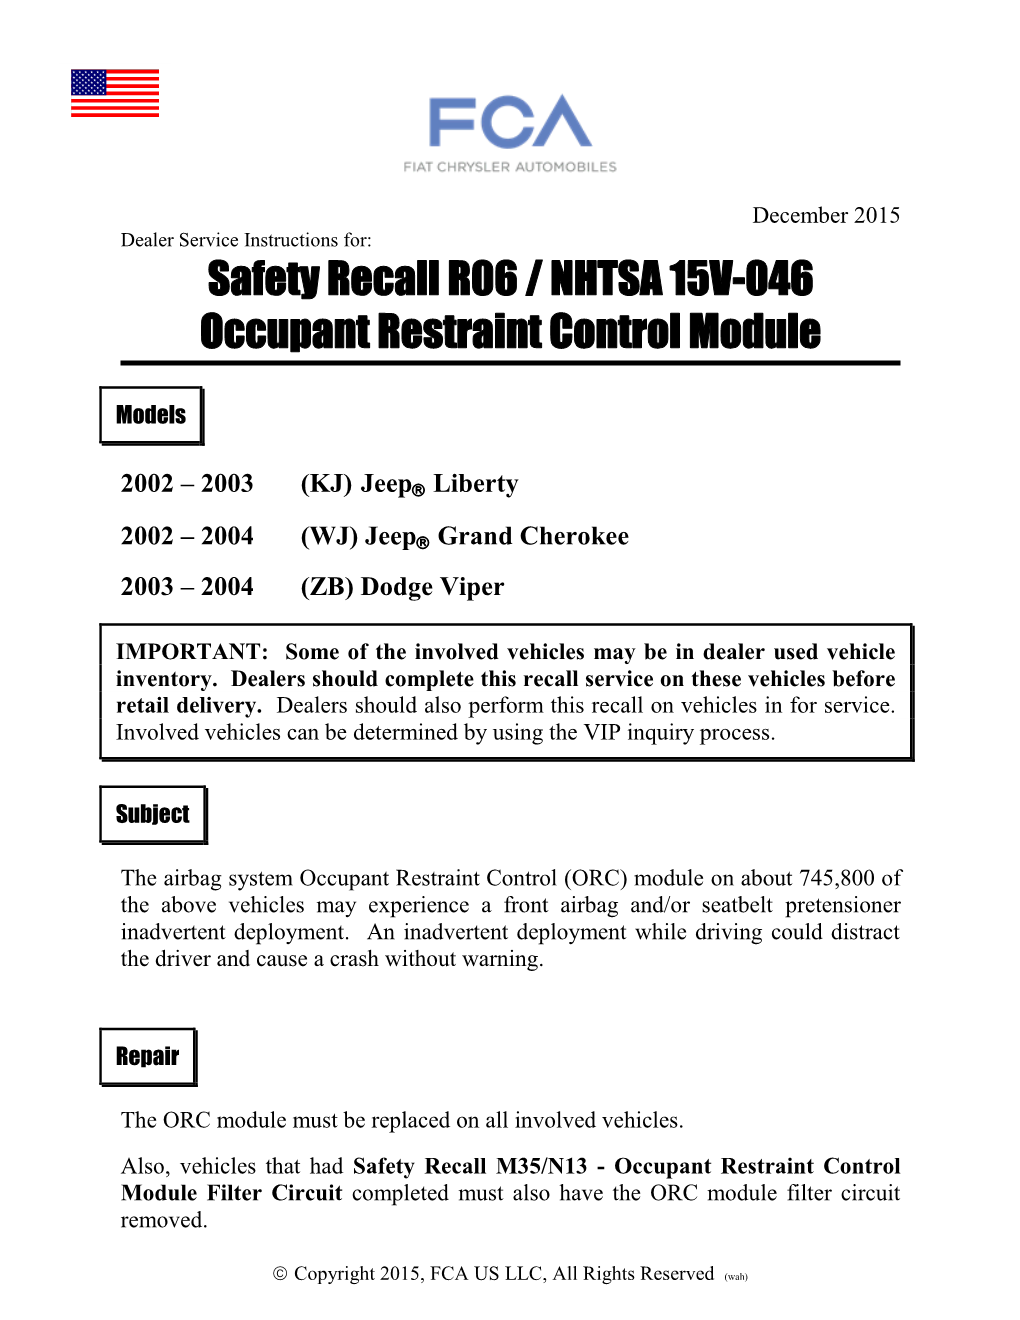 Safety Recall R06/ NHTSA 15V-046 Occupant Restraint Control Module